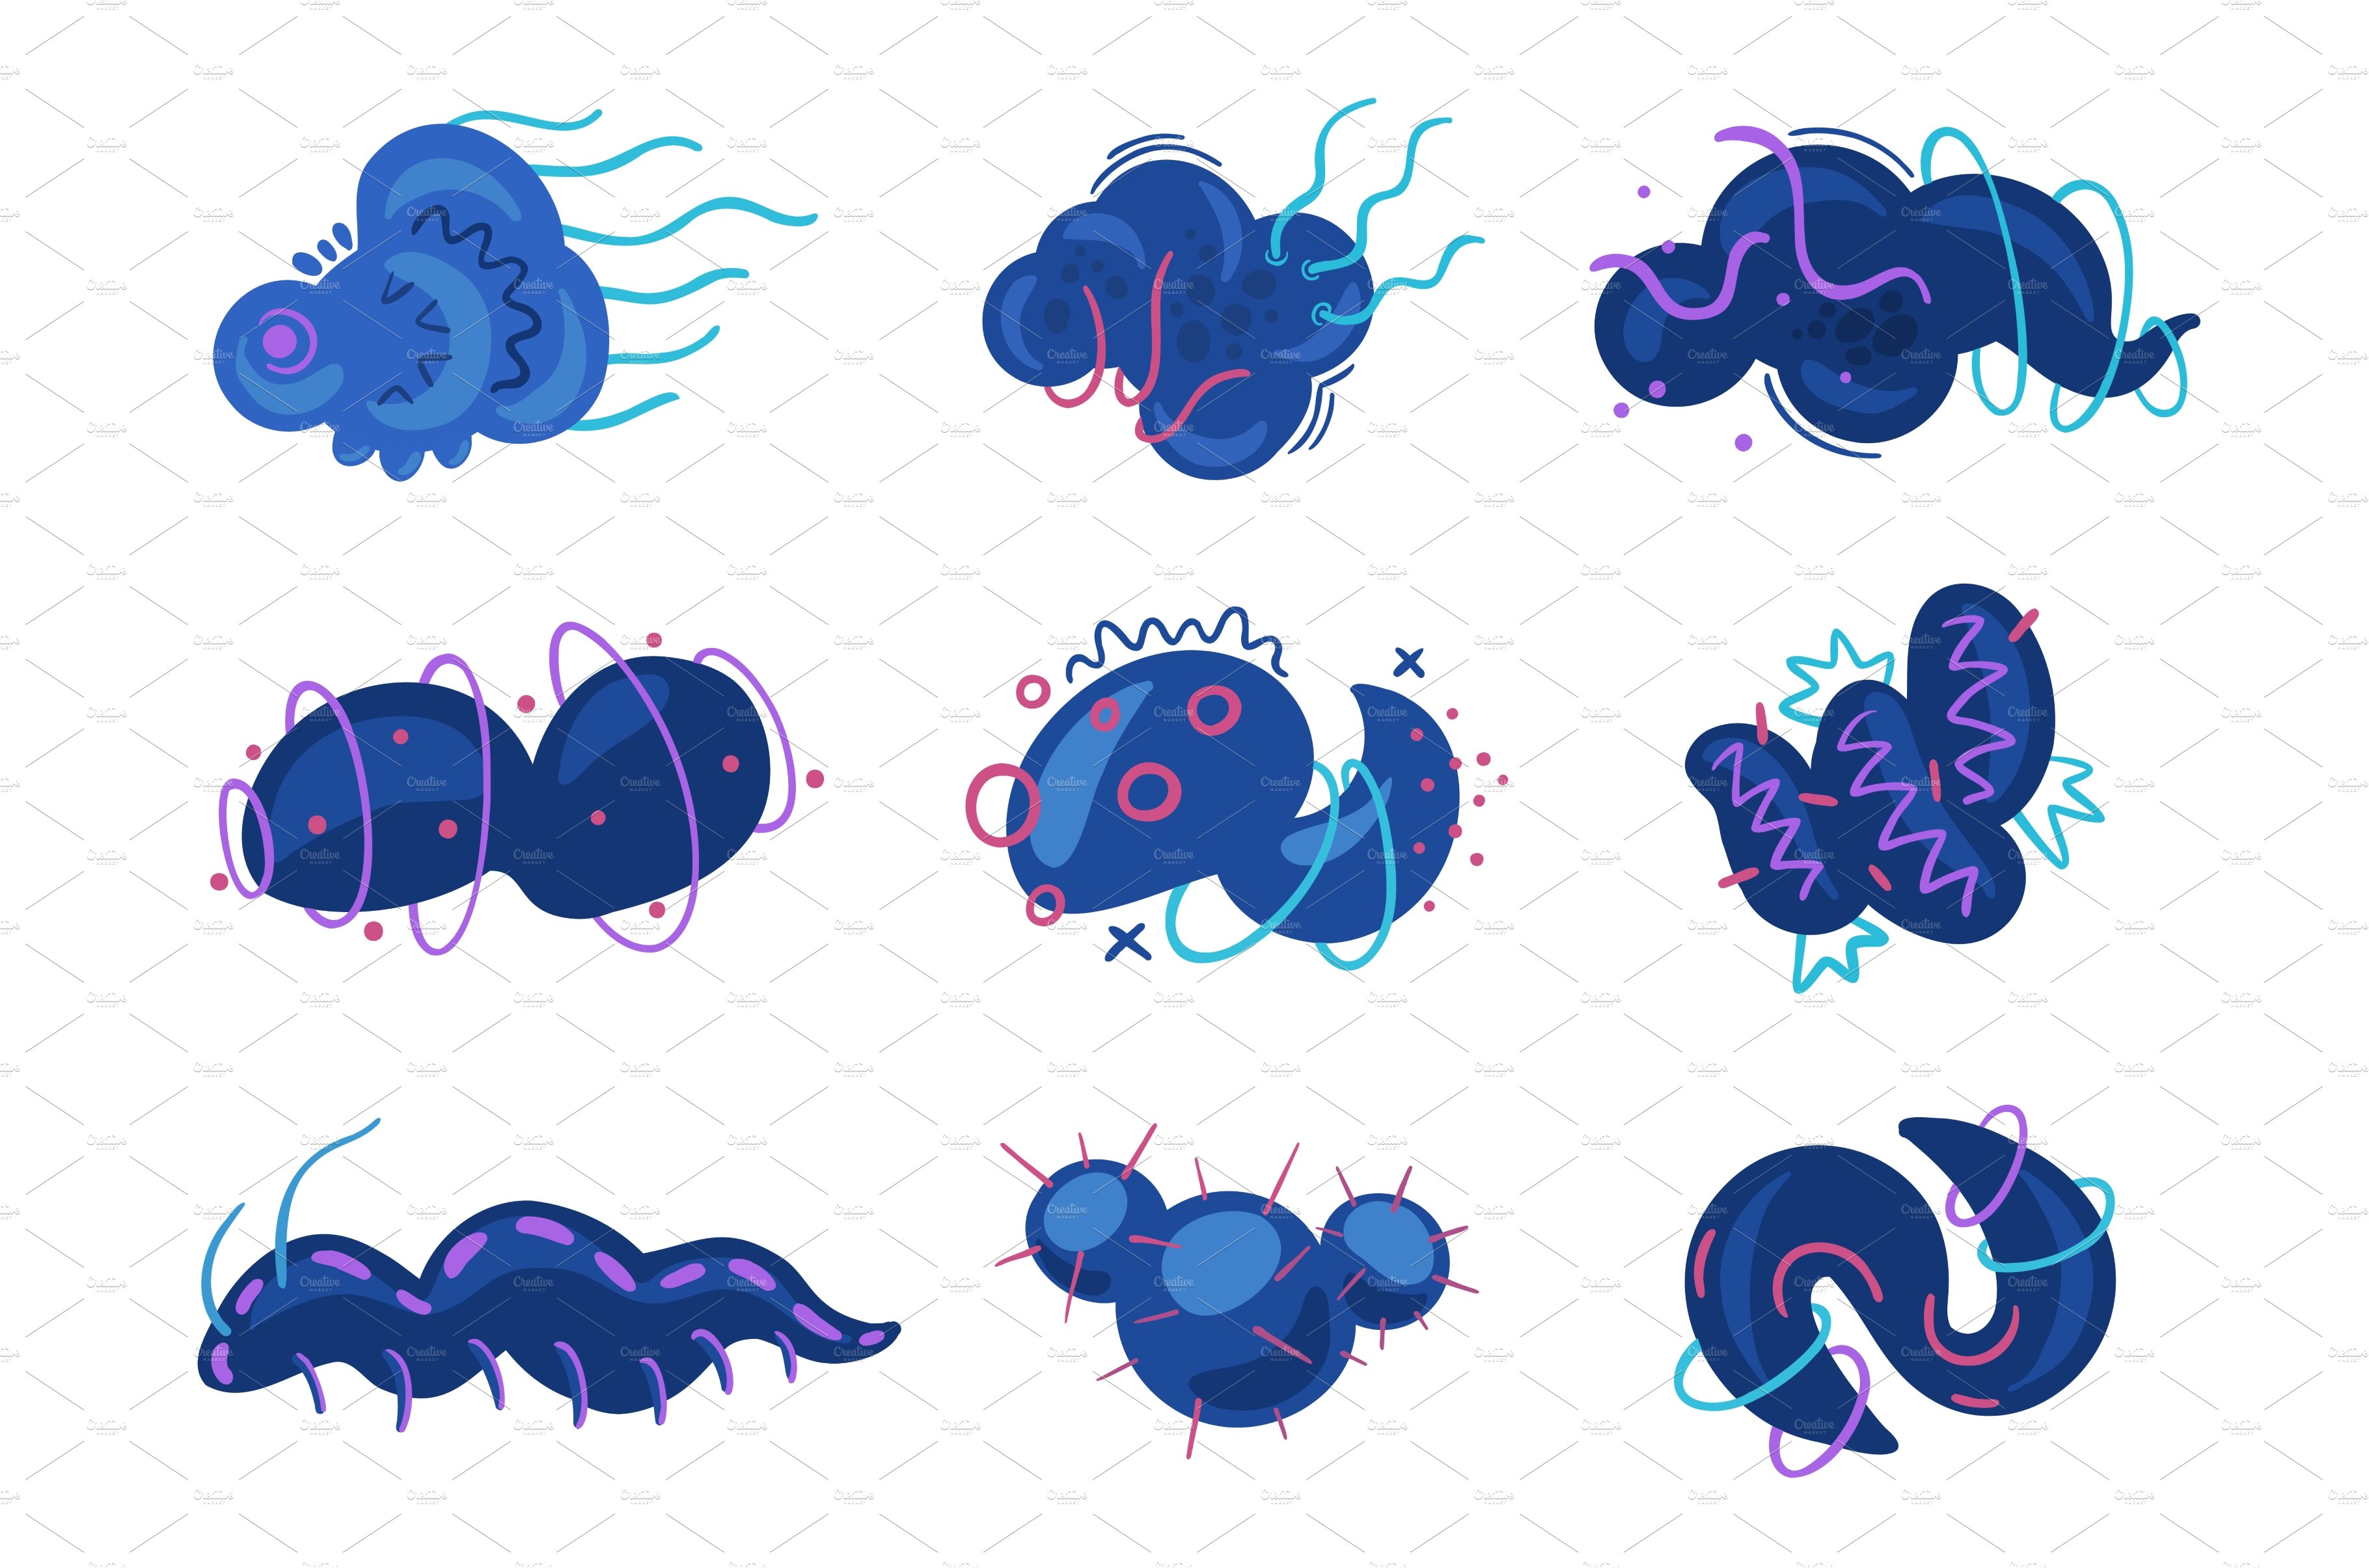 Different types of viruses. Strange cover image.